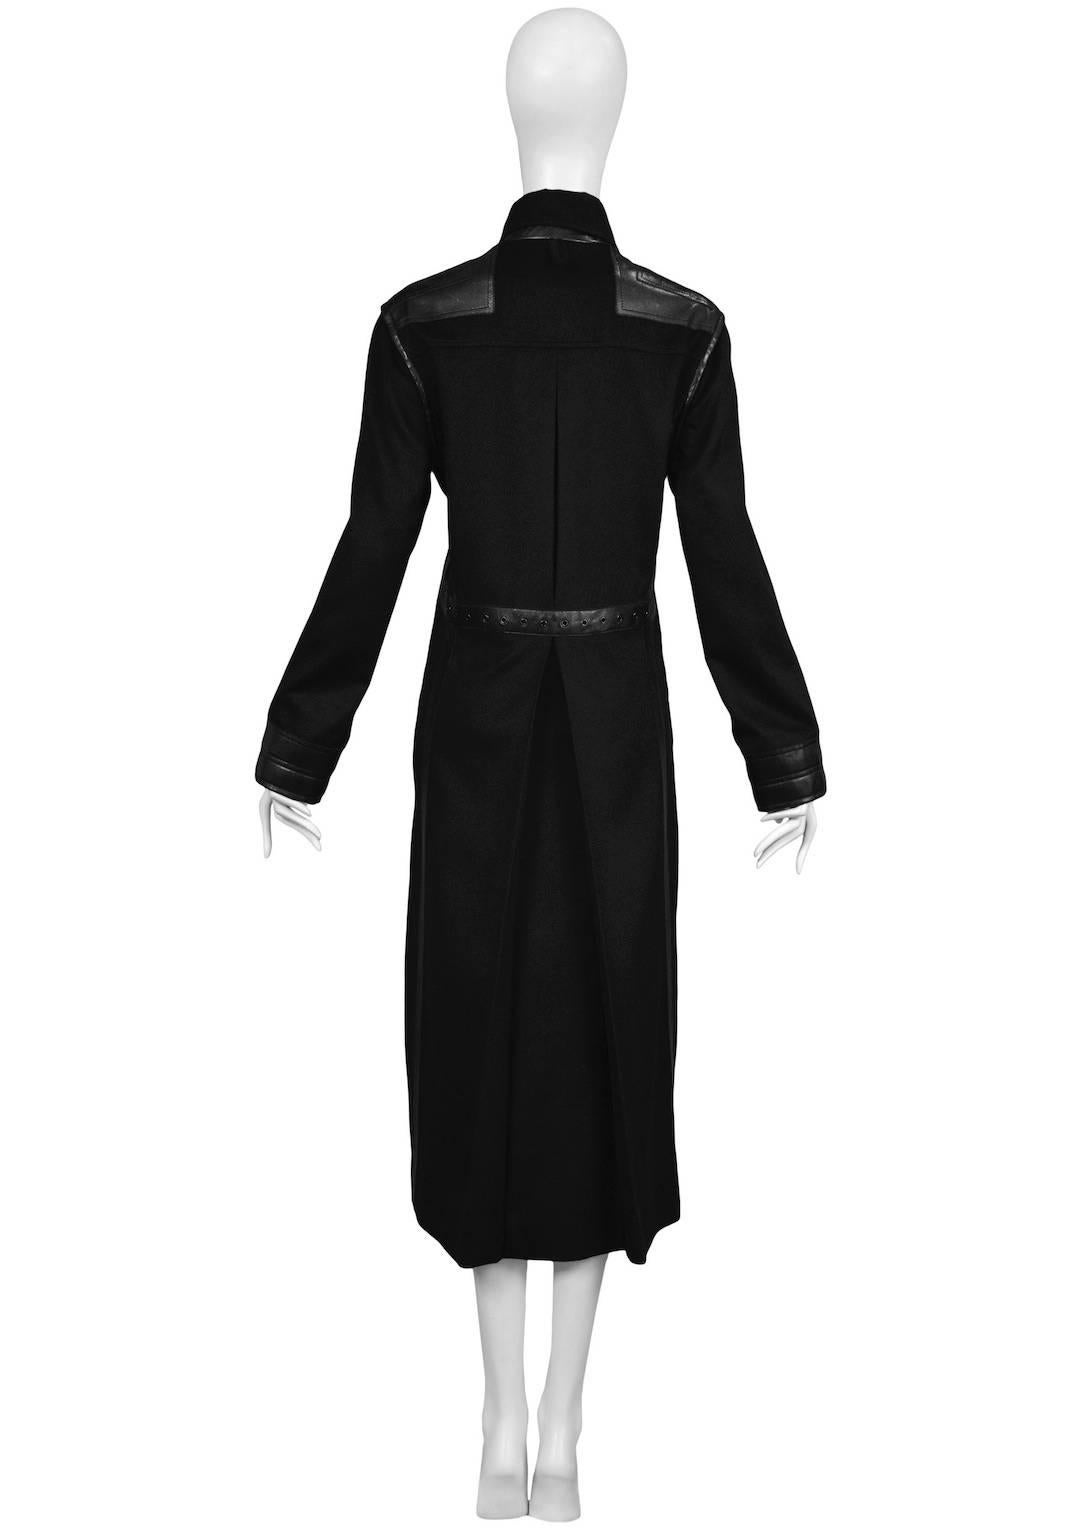 Women's Christian Dior Black Wool & Leather Buckle Coat